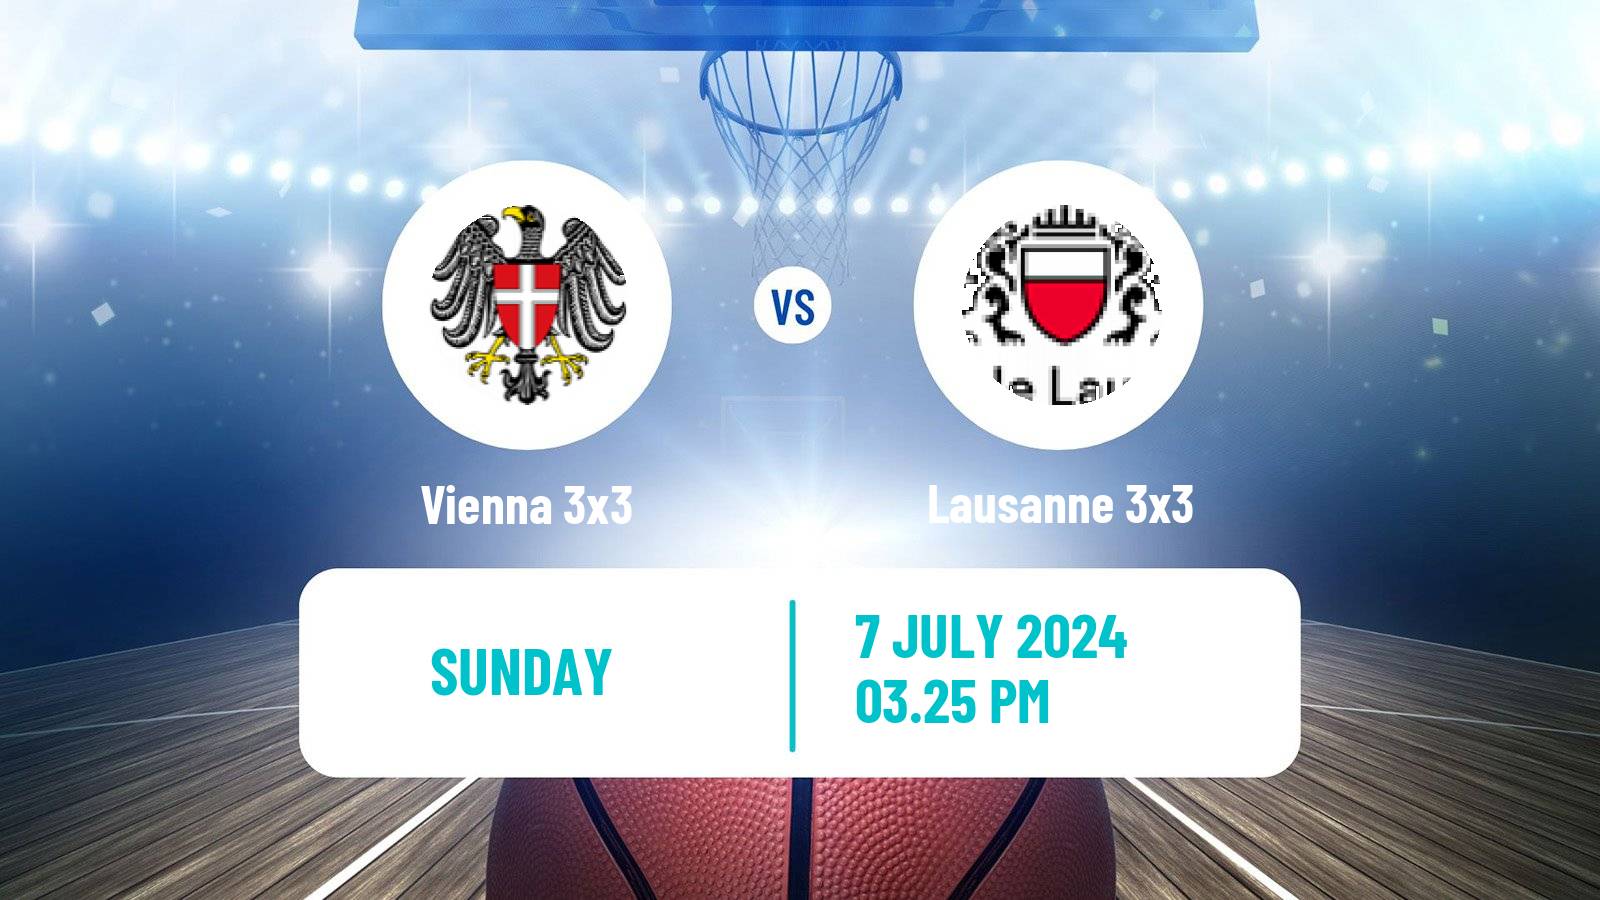 Basketball World Tour Edmonton 3x3 Vienna 3x3 - Lausanne 3x3